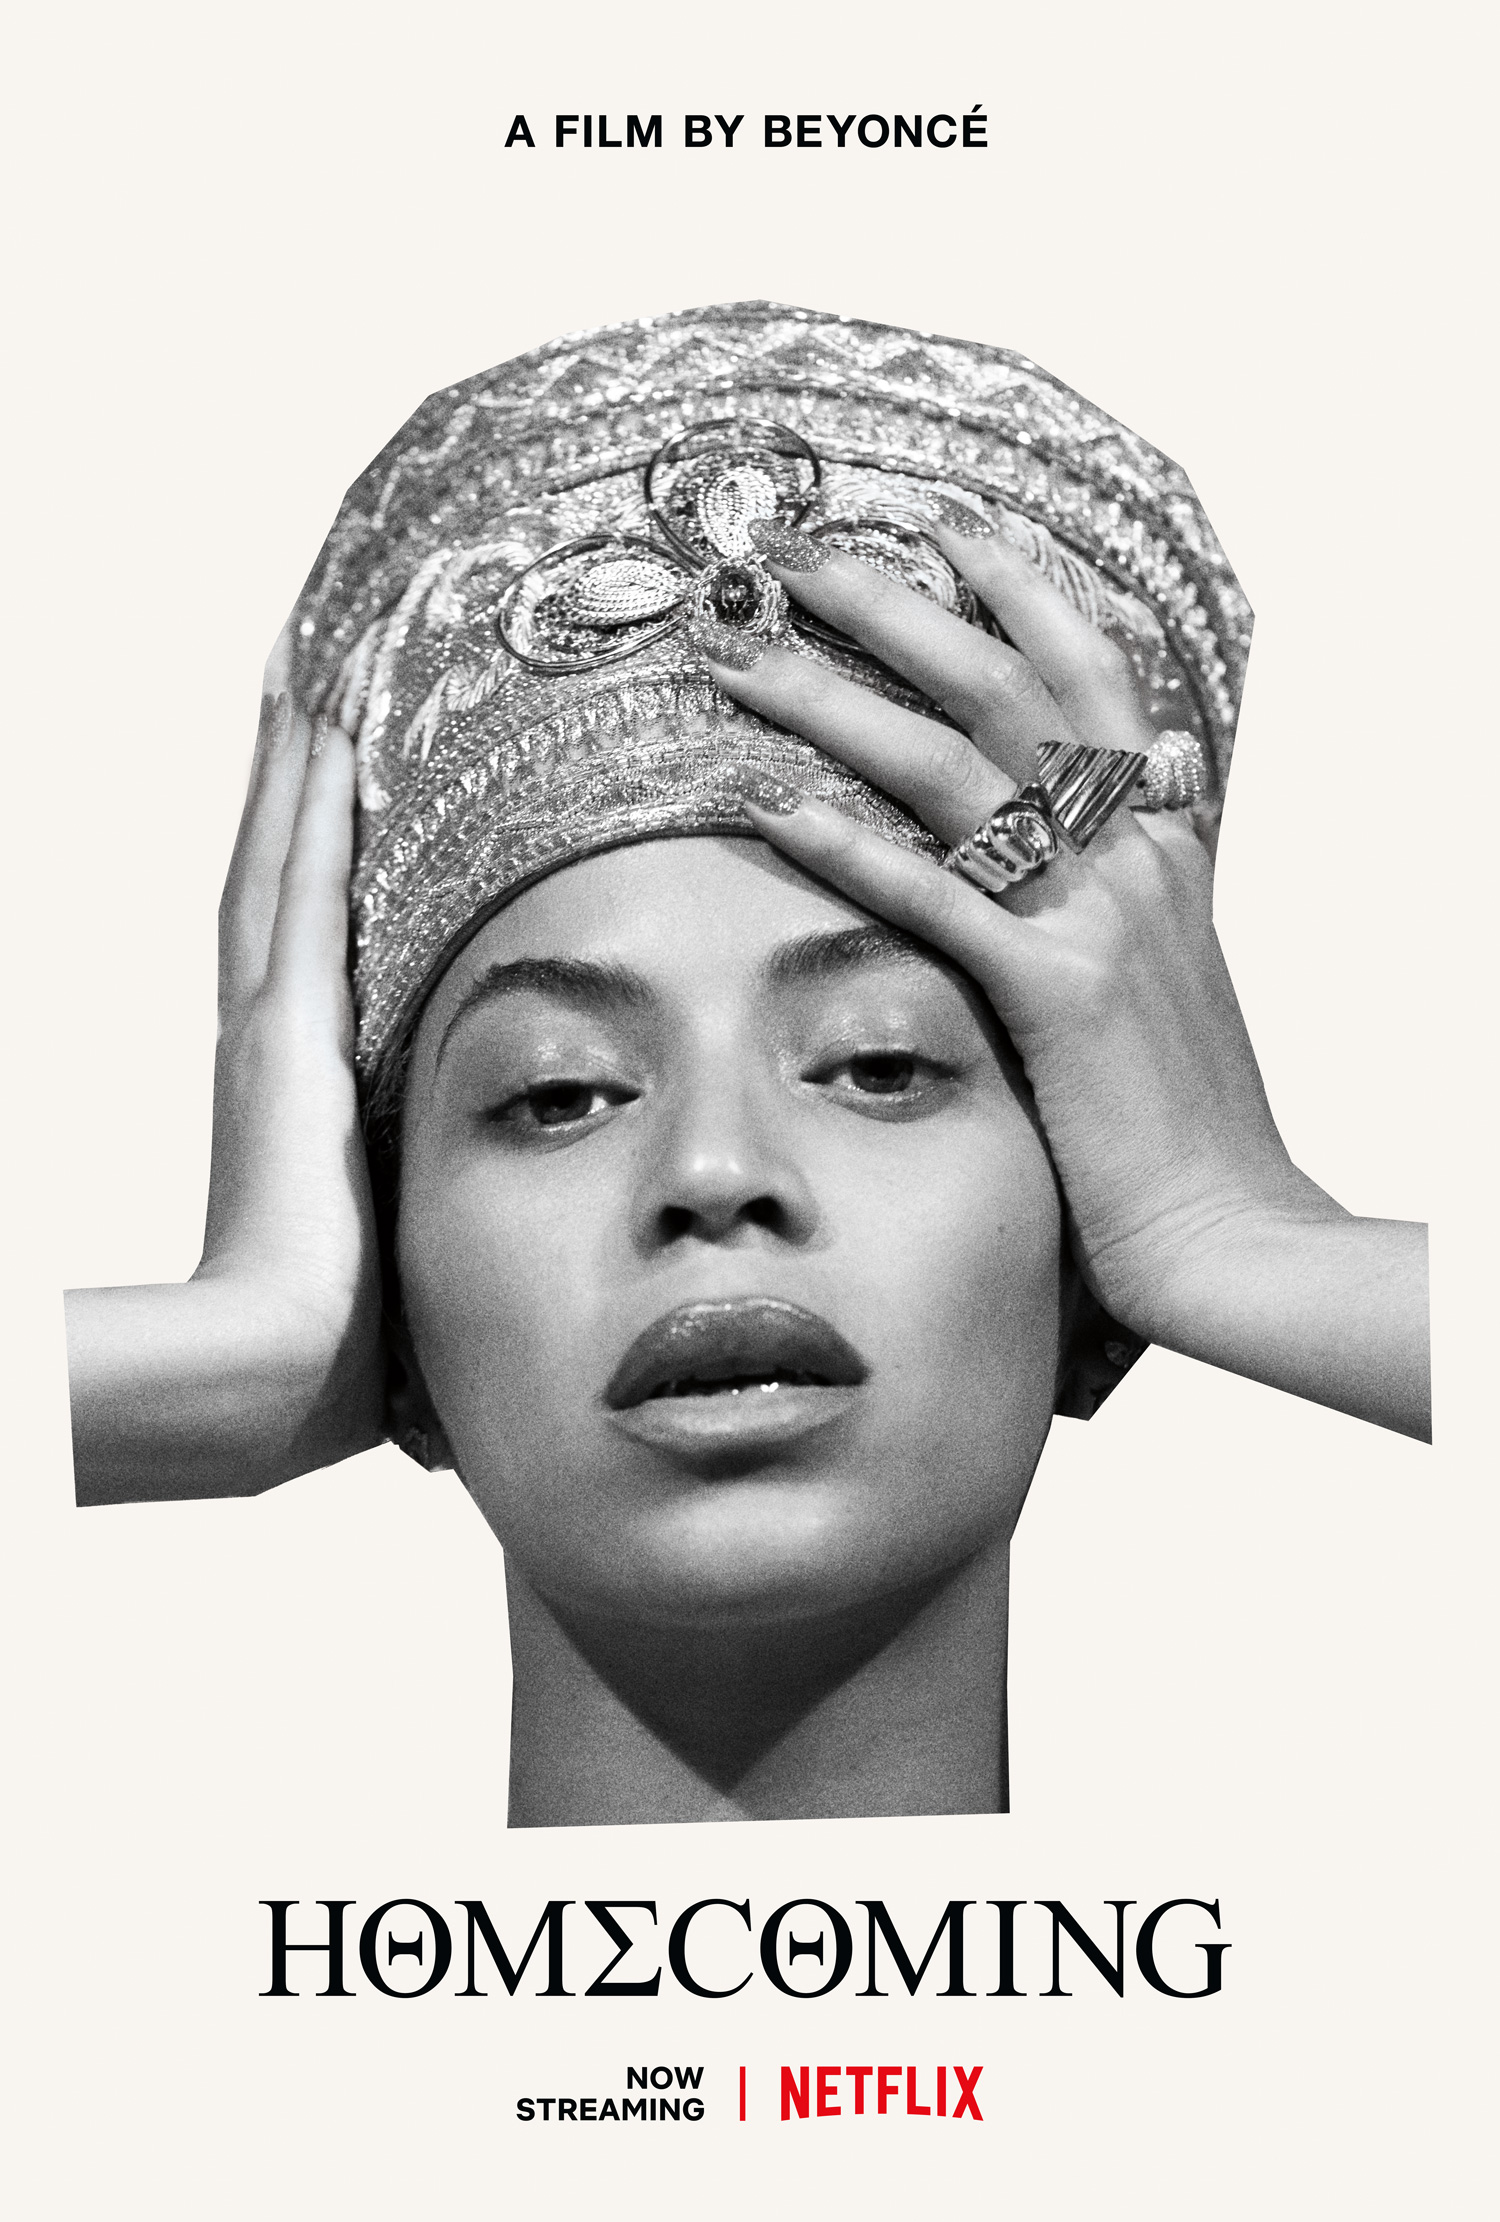 Nonton film Homecoming: A Film by Beyoncé layarkaca21 indoxx1 ganool online streaming terbaru